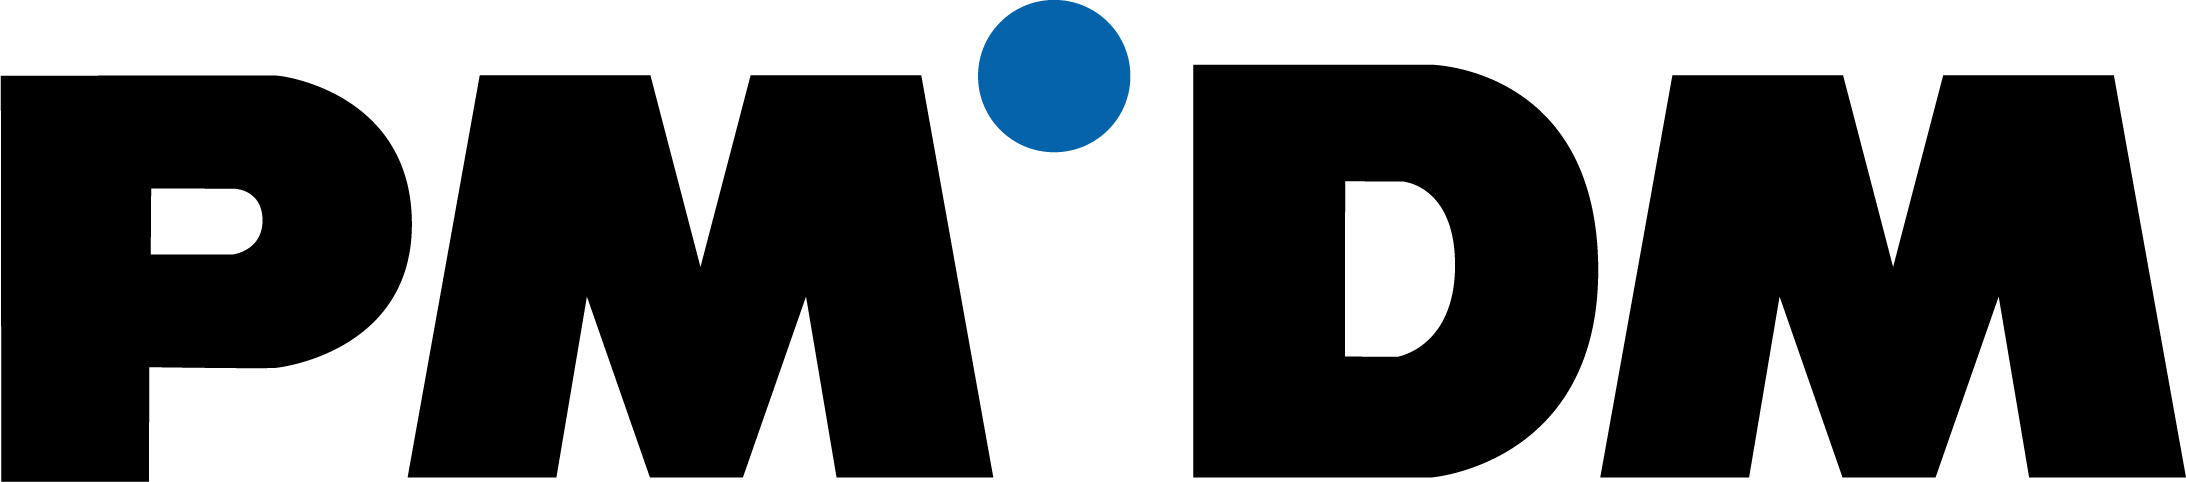 pmdm company logo